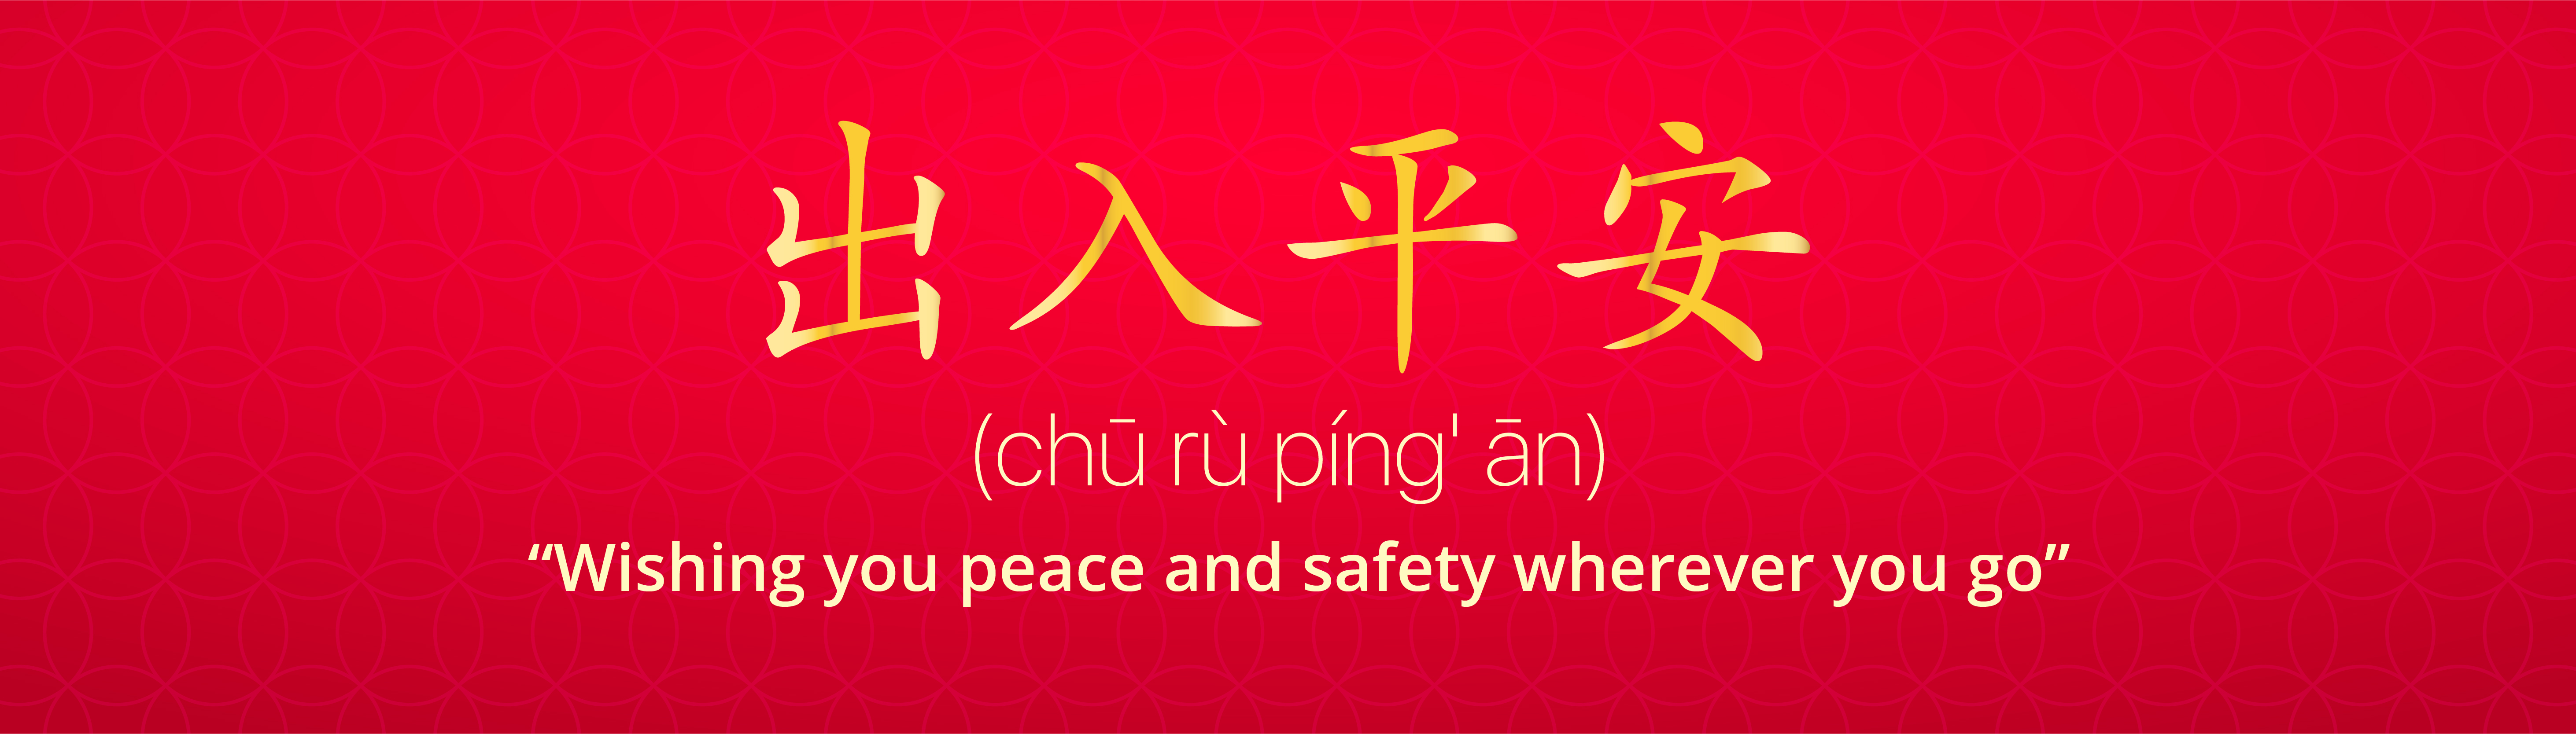 Chu Ru Ping An (出入平安): “Wishing you peace and safety wherever you go”